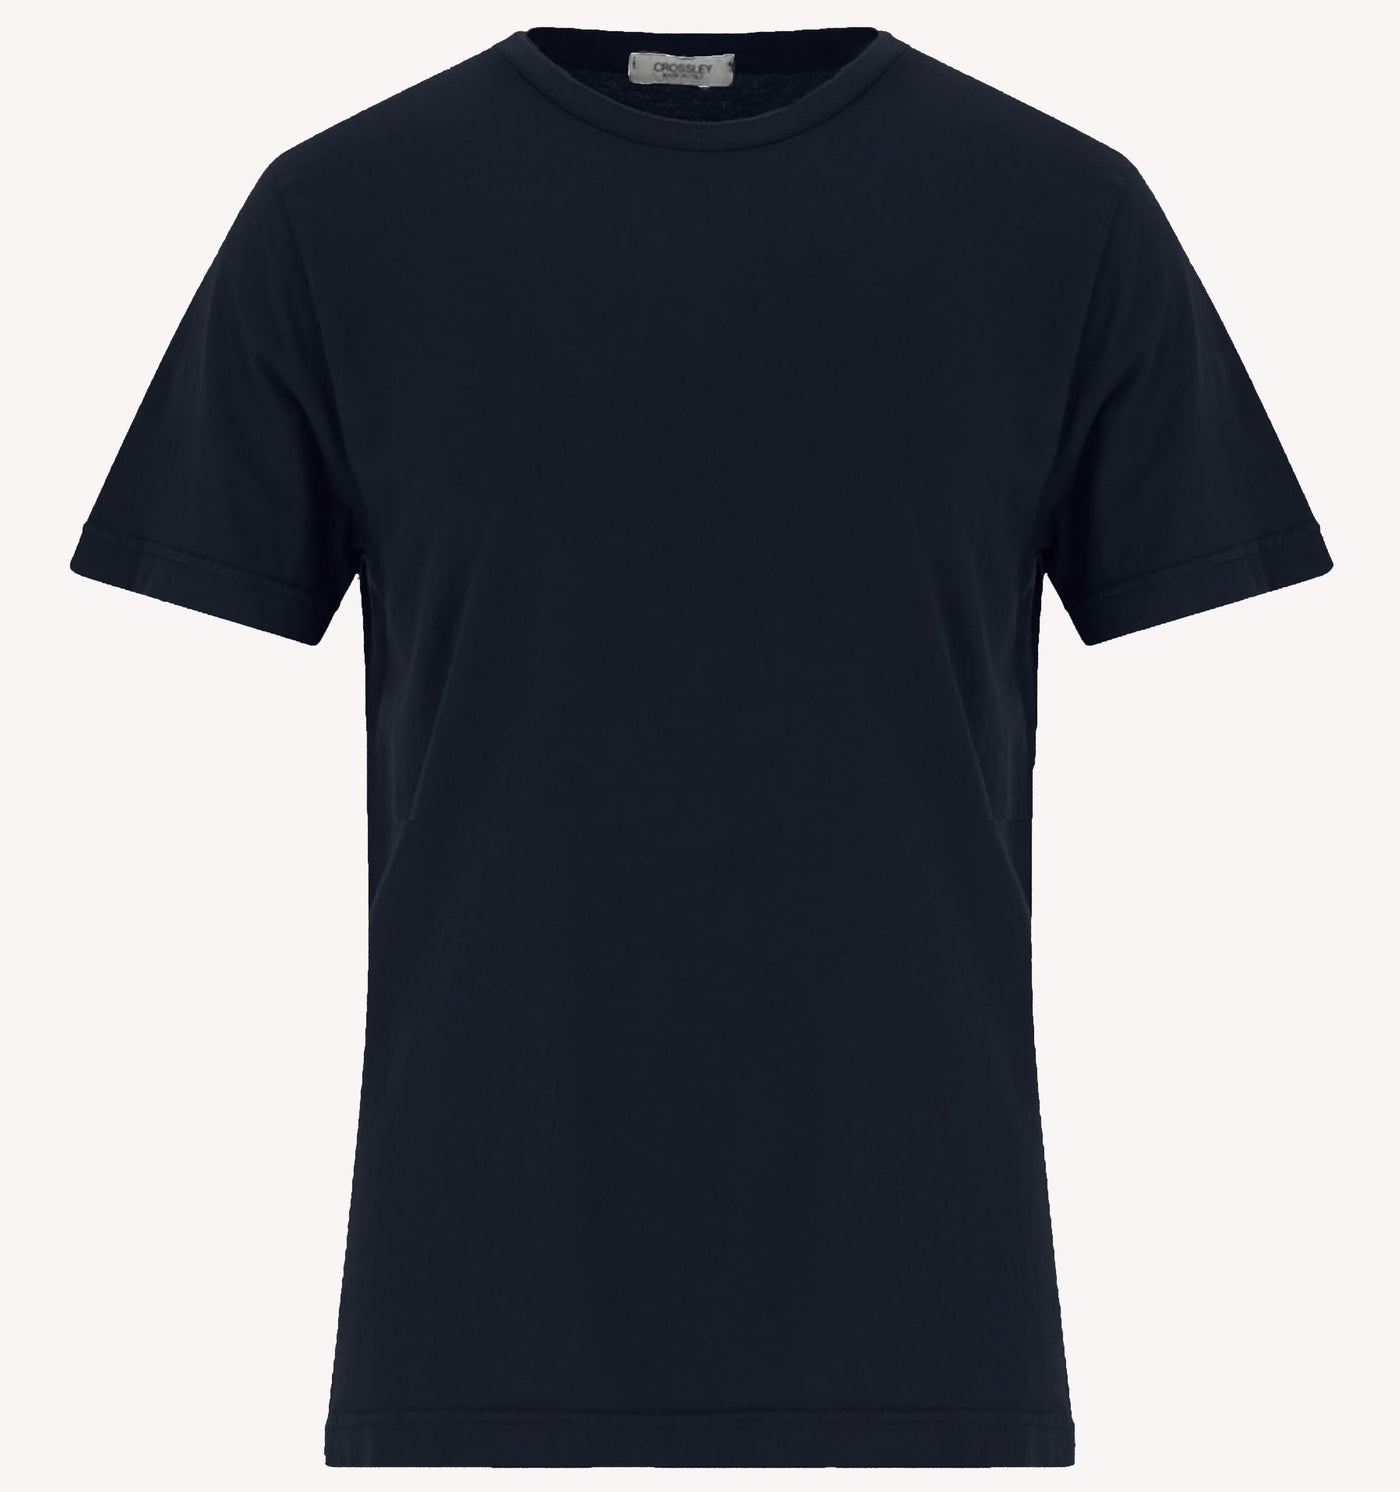 Crossley T-shirt in Navy Blue